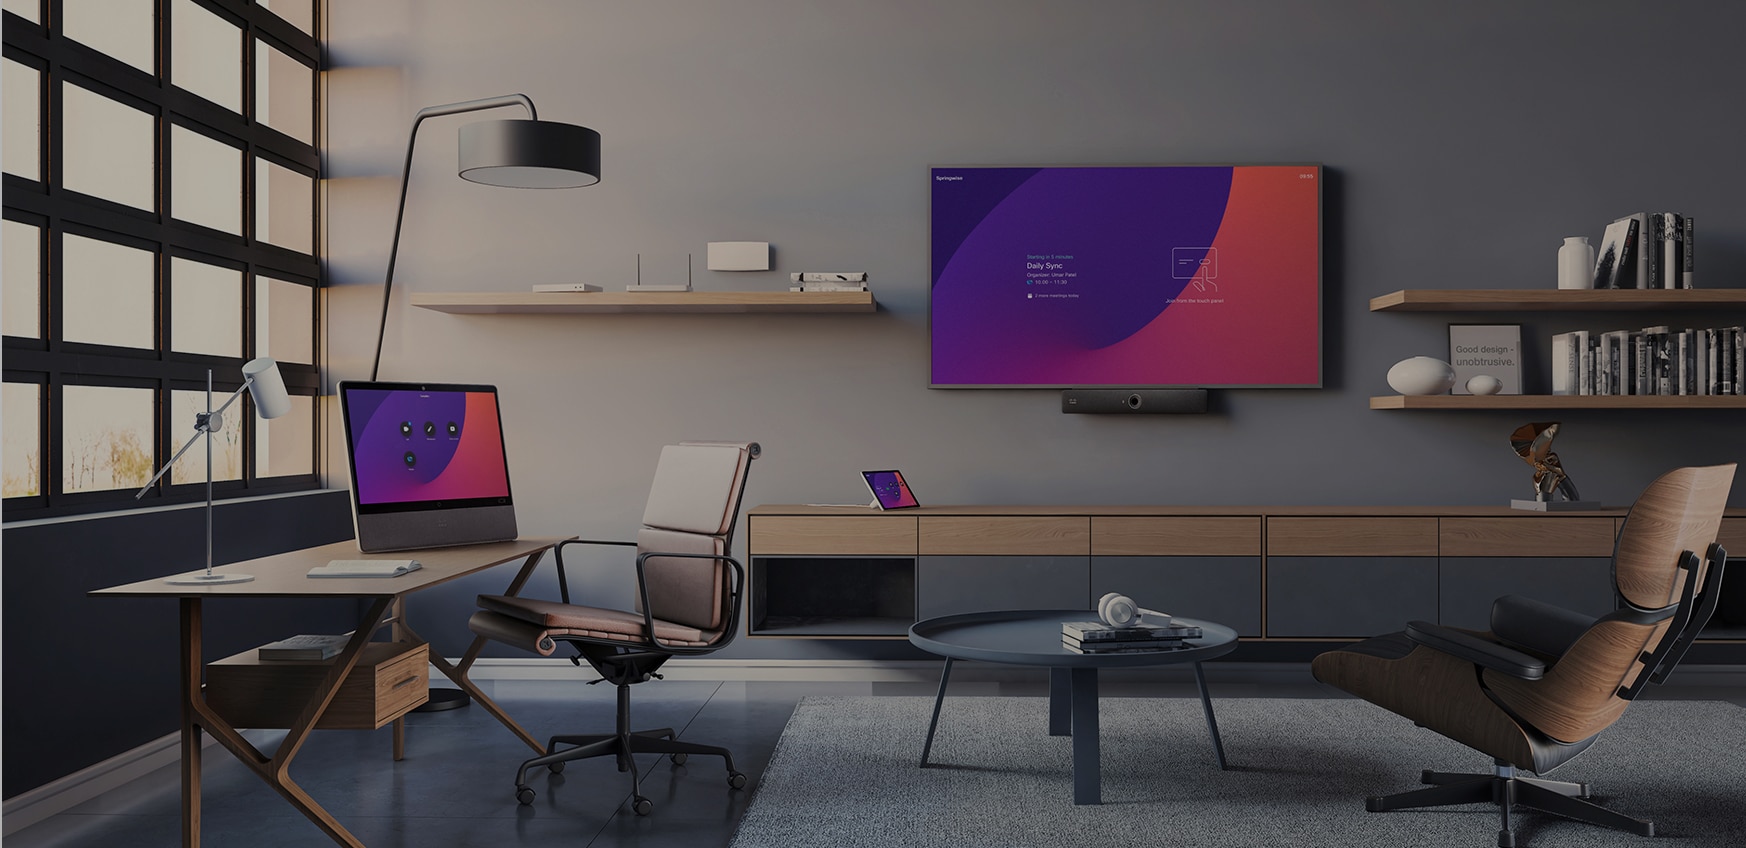 A dedicated office featuring a Webex Desk and a Cisco Room Bar video bar.